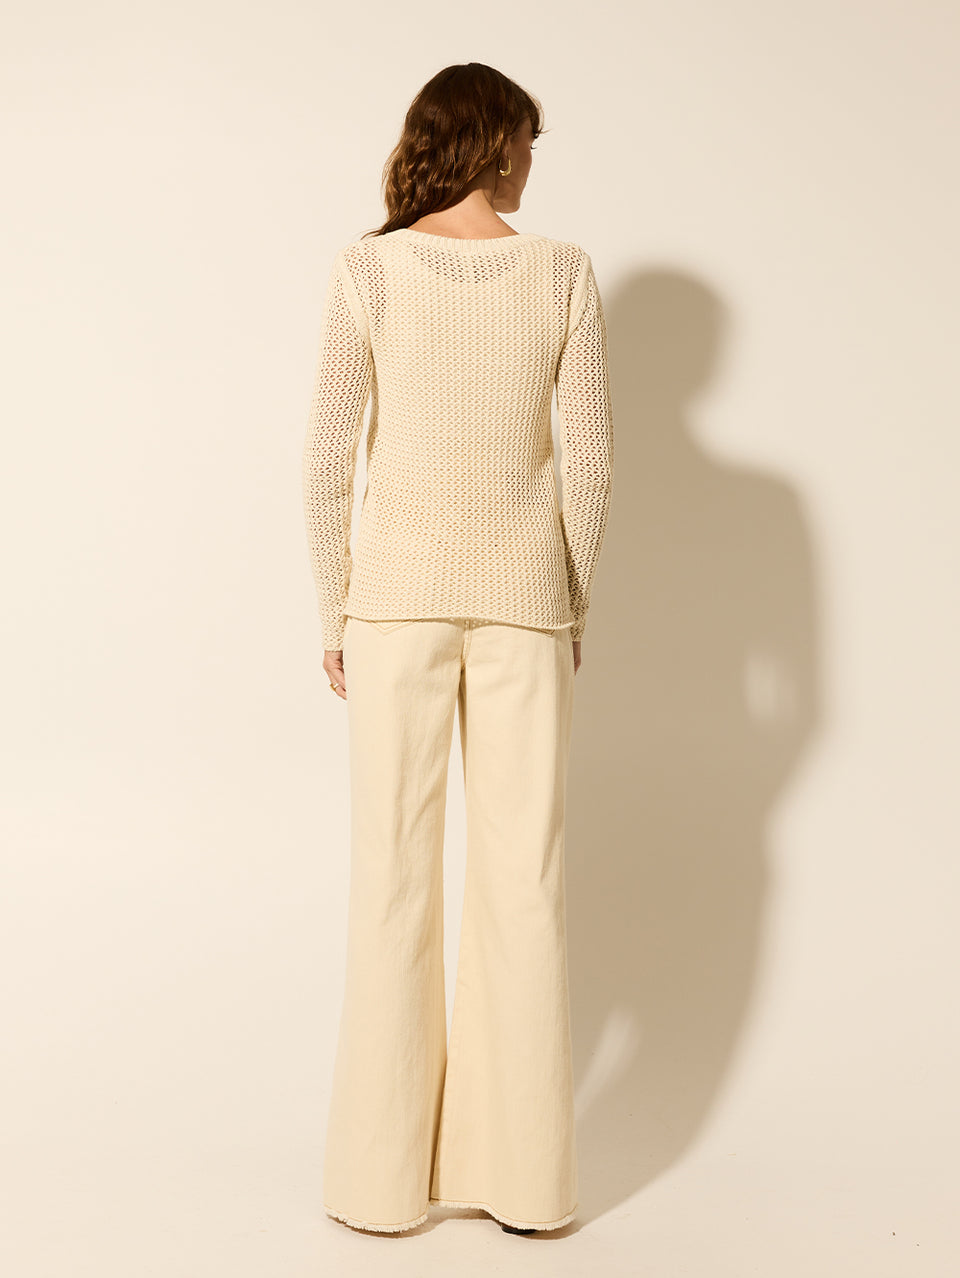 Eliana Knit Cream KIVARI | Model wears cream knit top back view